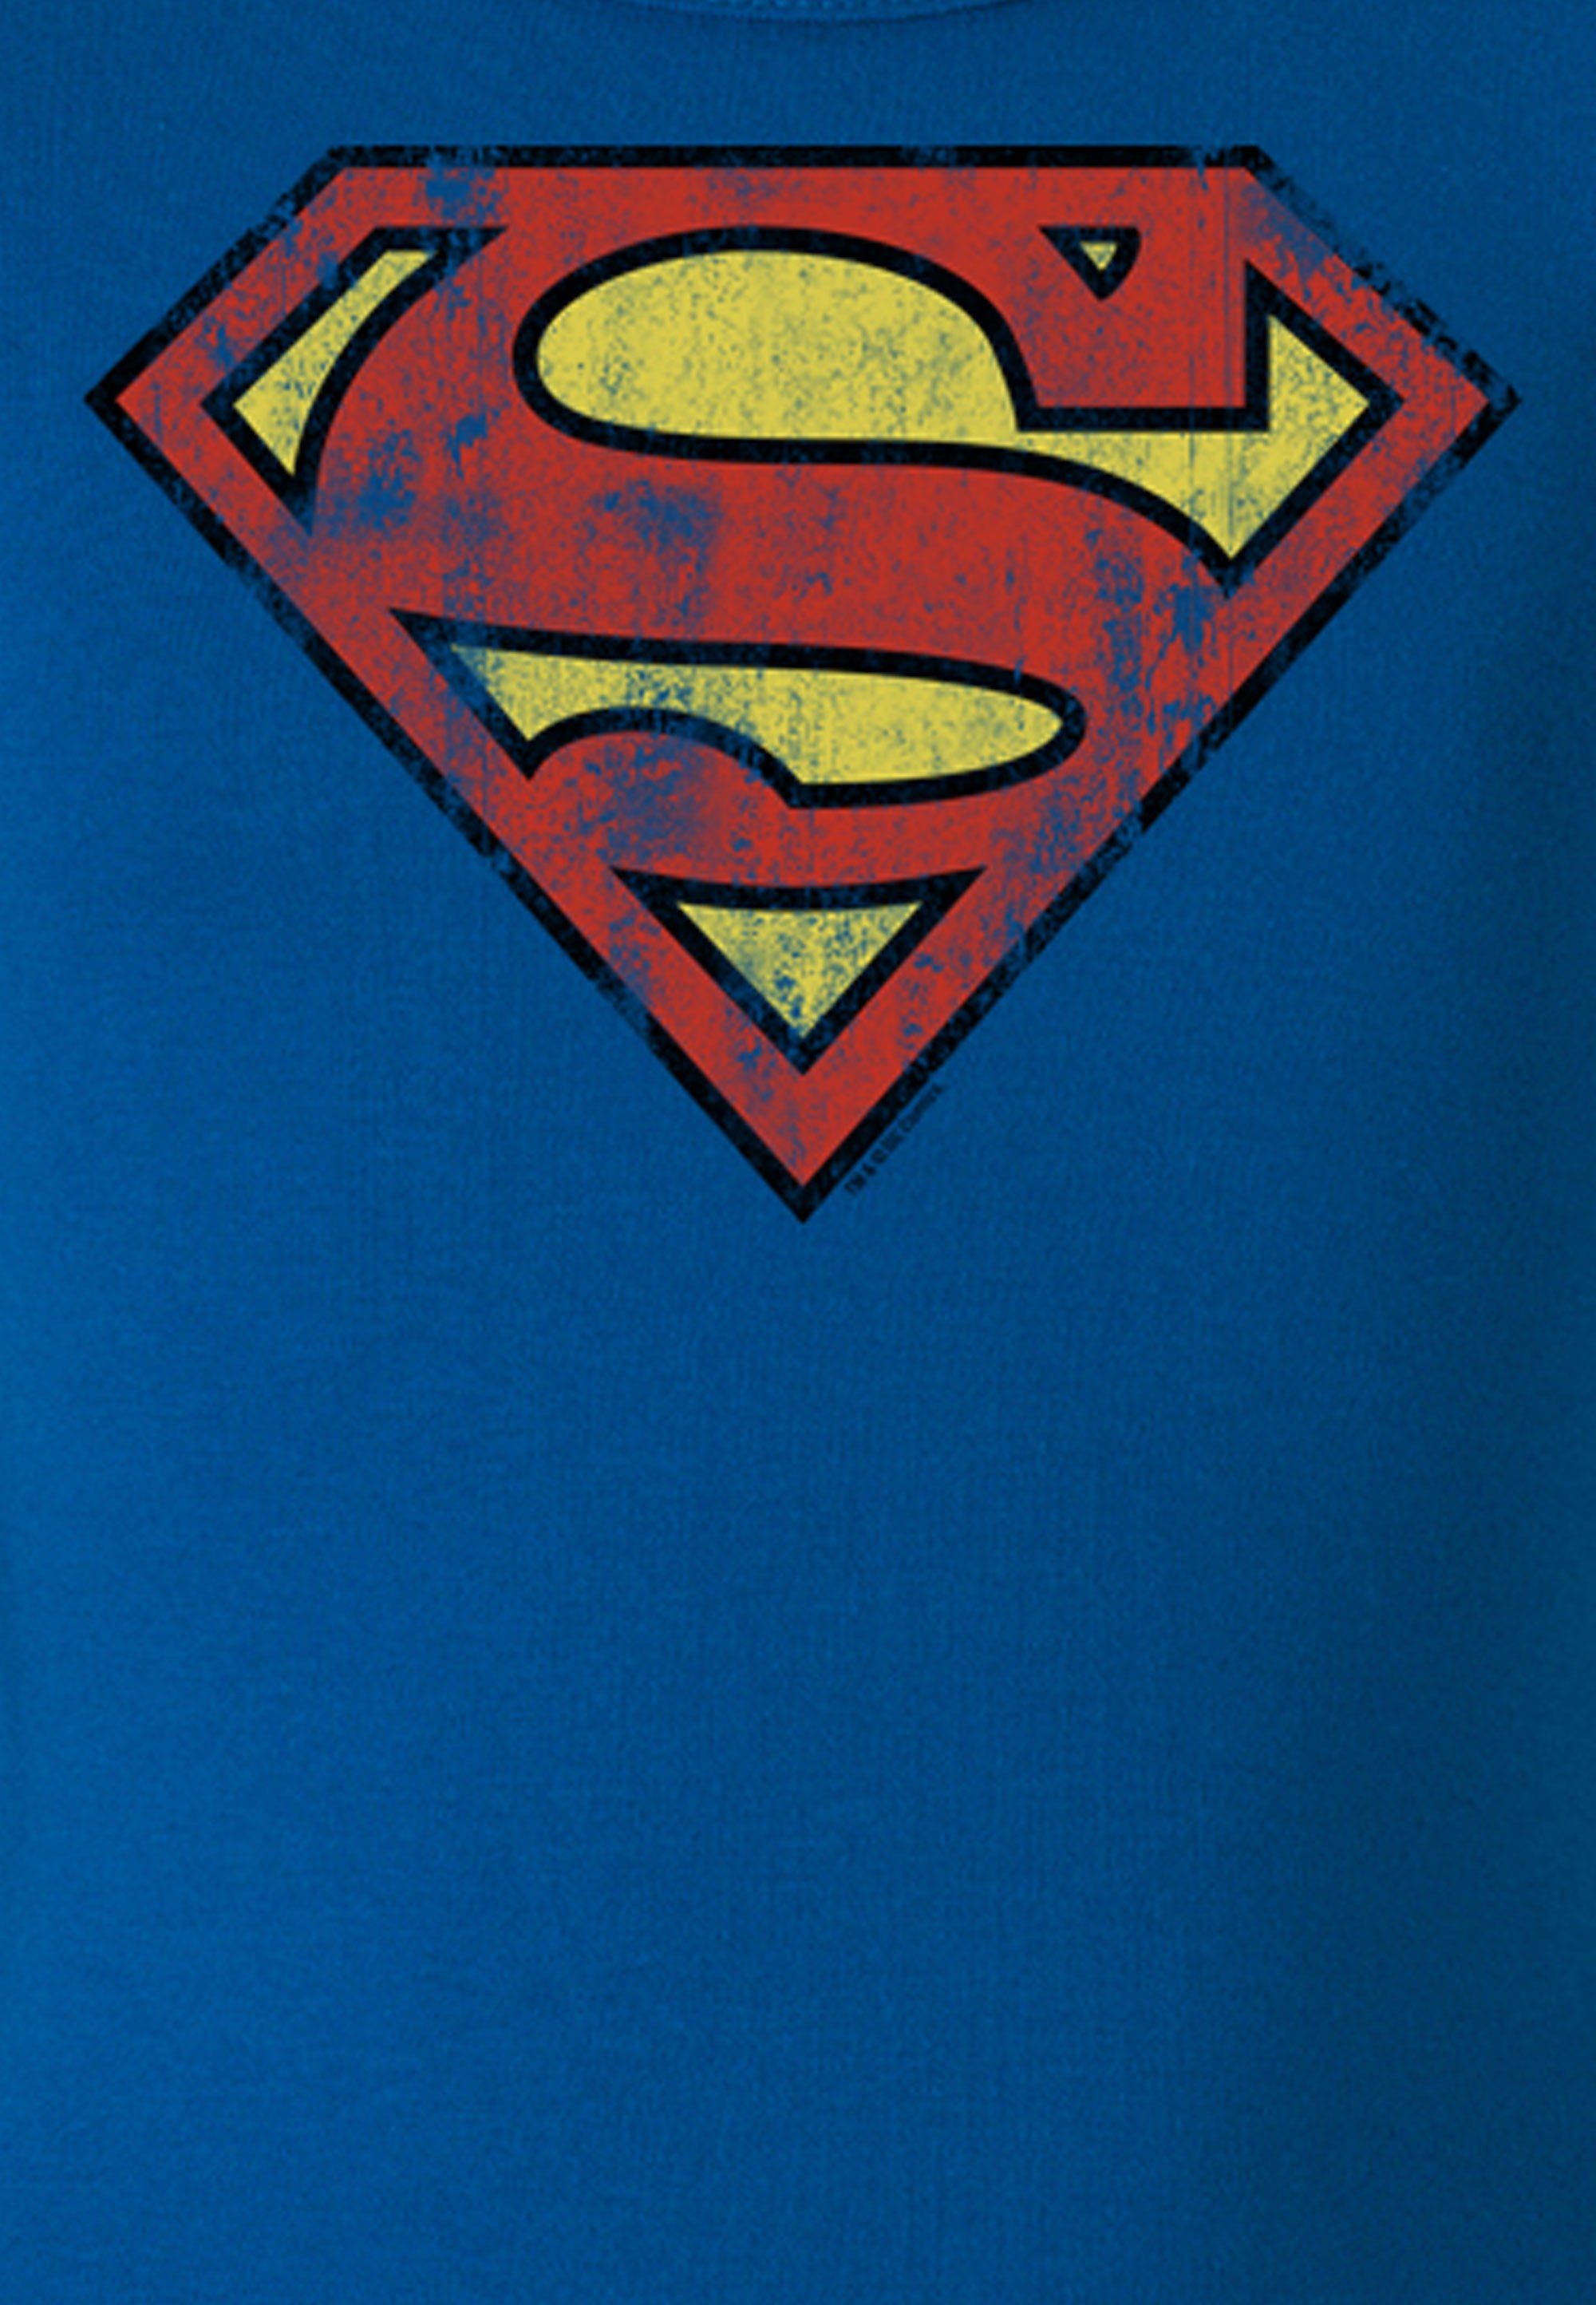 LOGOSHIRT T-Shirt Frontprint mit tollem Superman